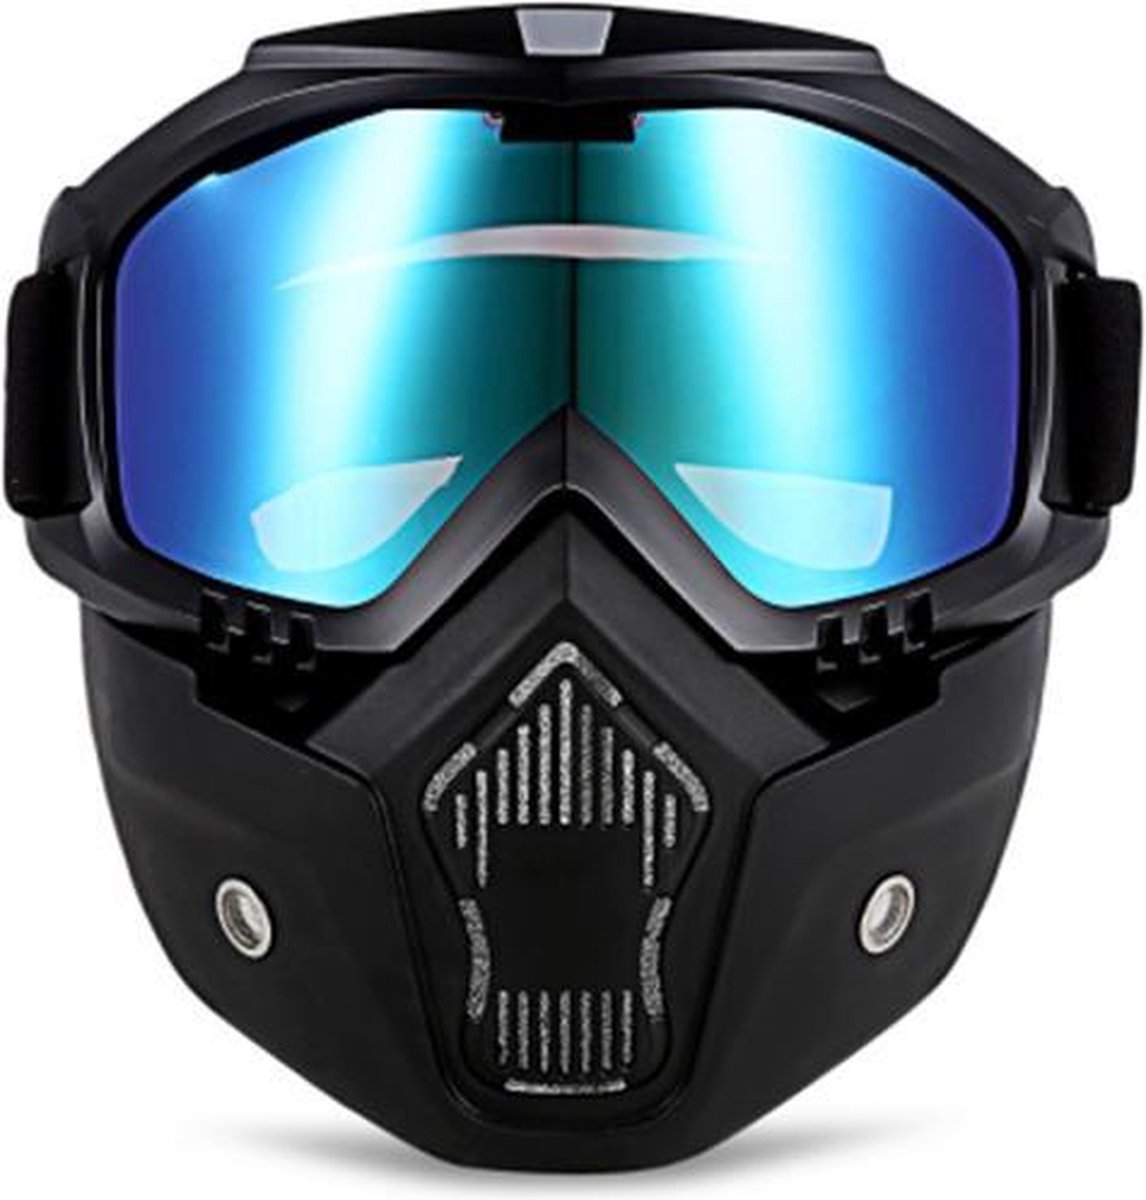 Motor-Fiets-Scooter-Ski bril & Masker I Anti-UV lens I Blauw